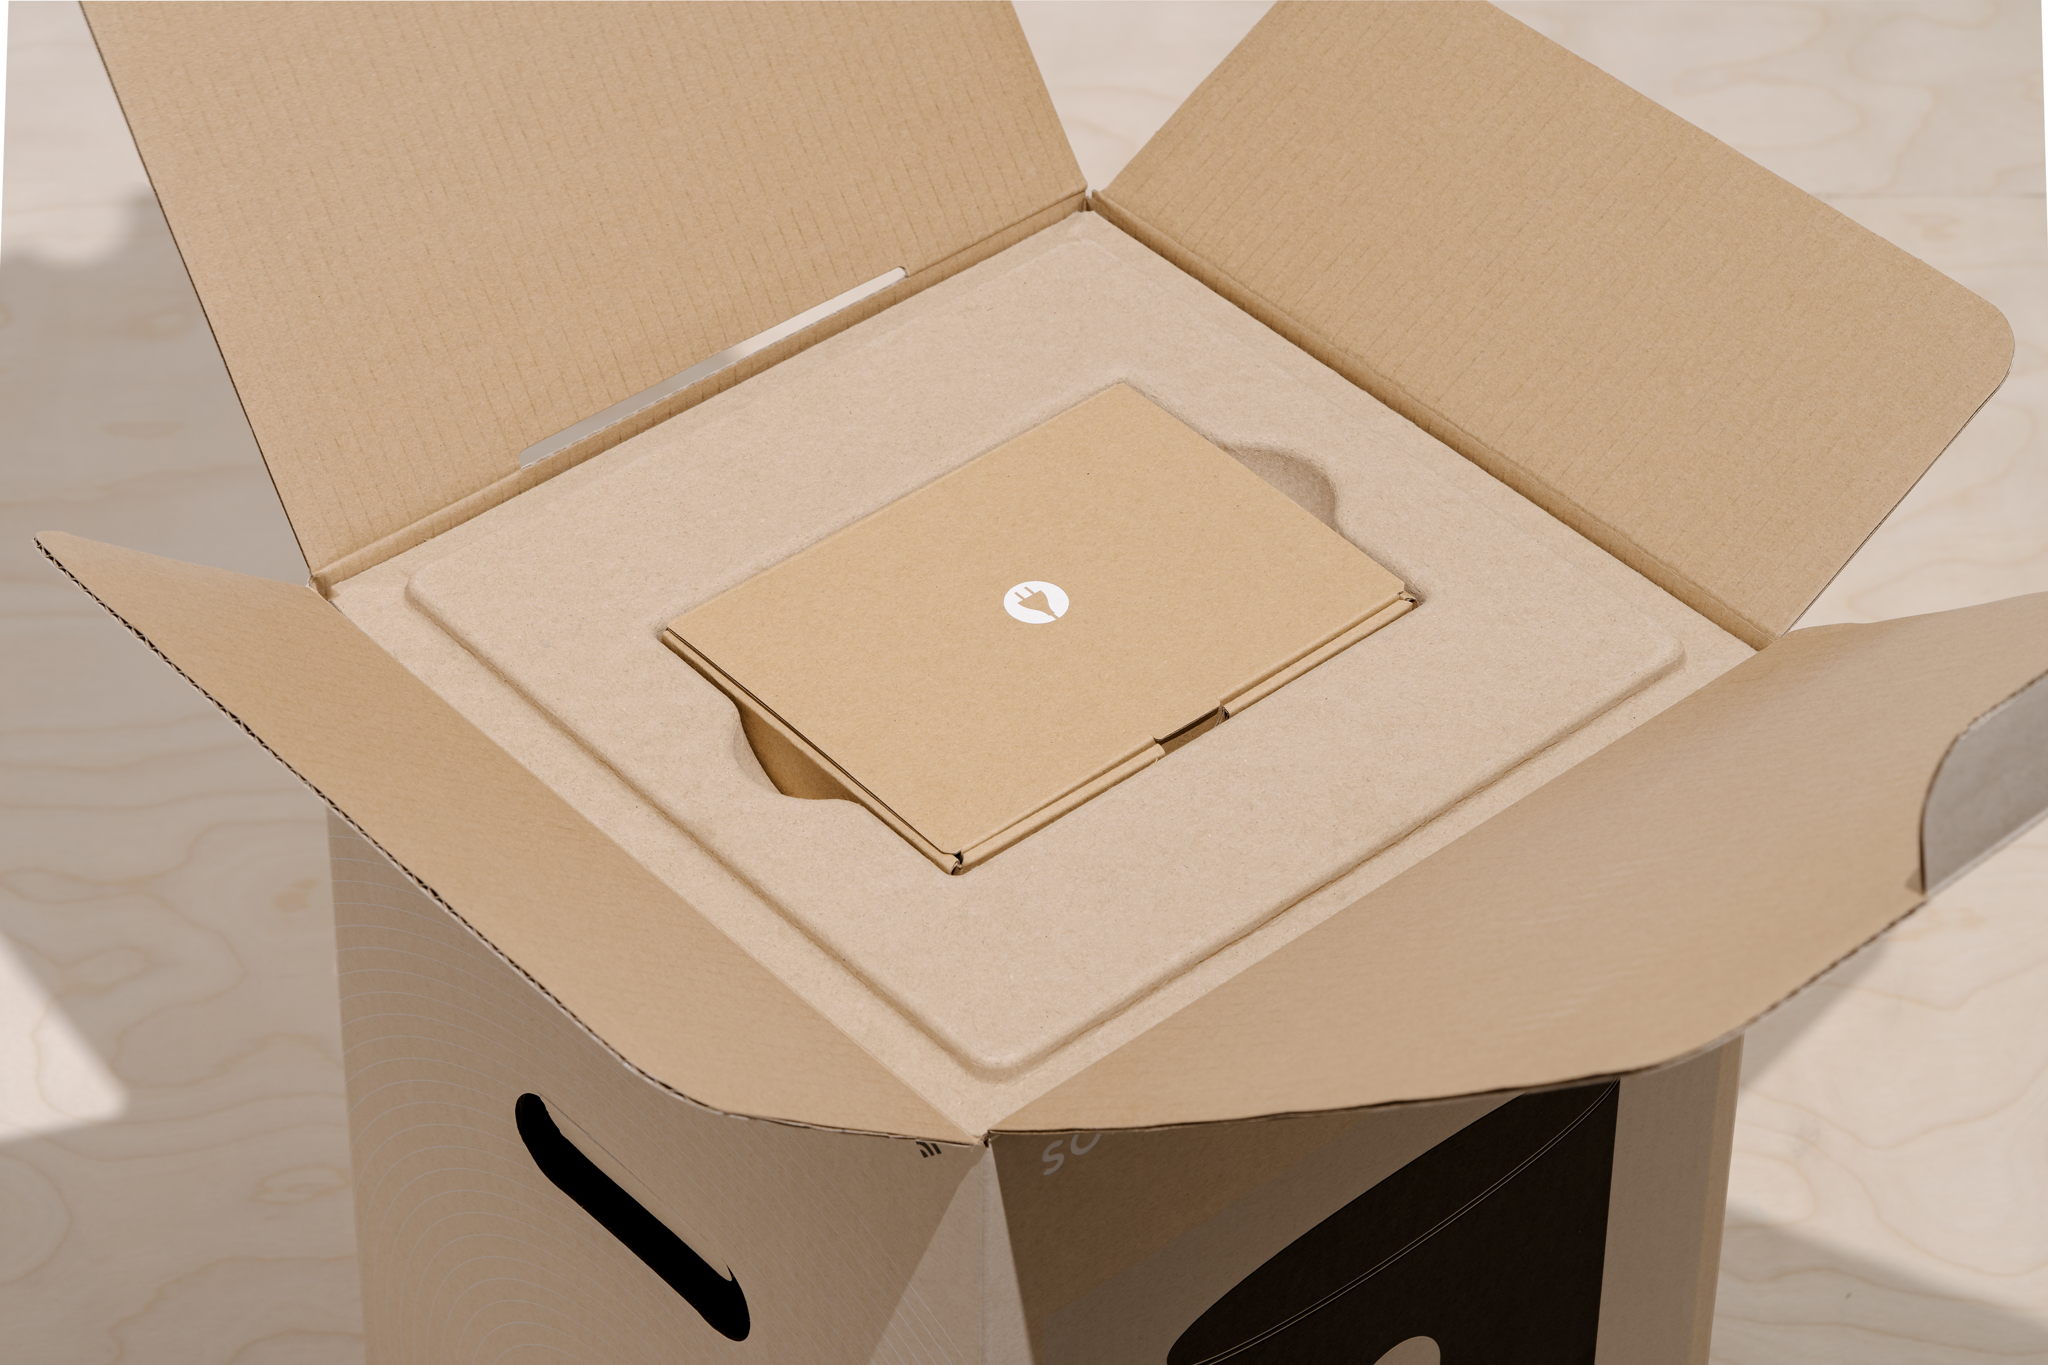 sonos-sub-mini-packaging-open-top-reveal-01.jpg